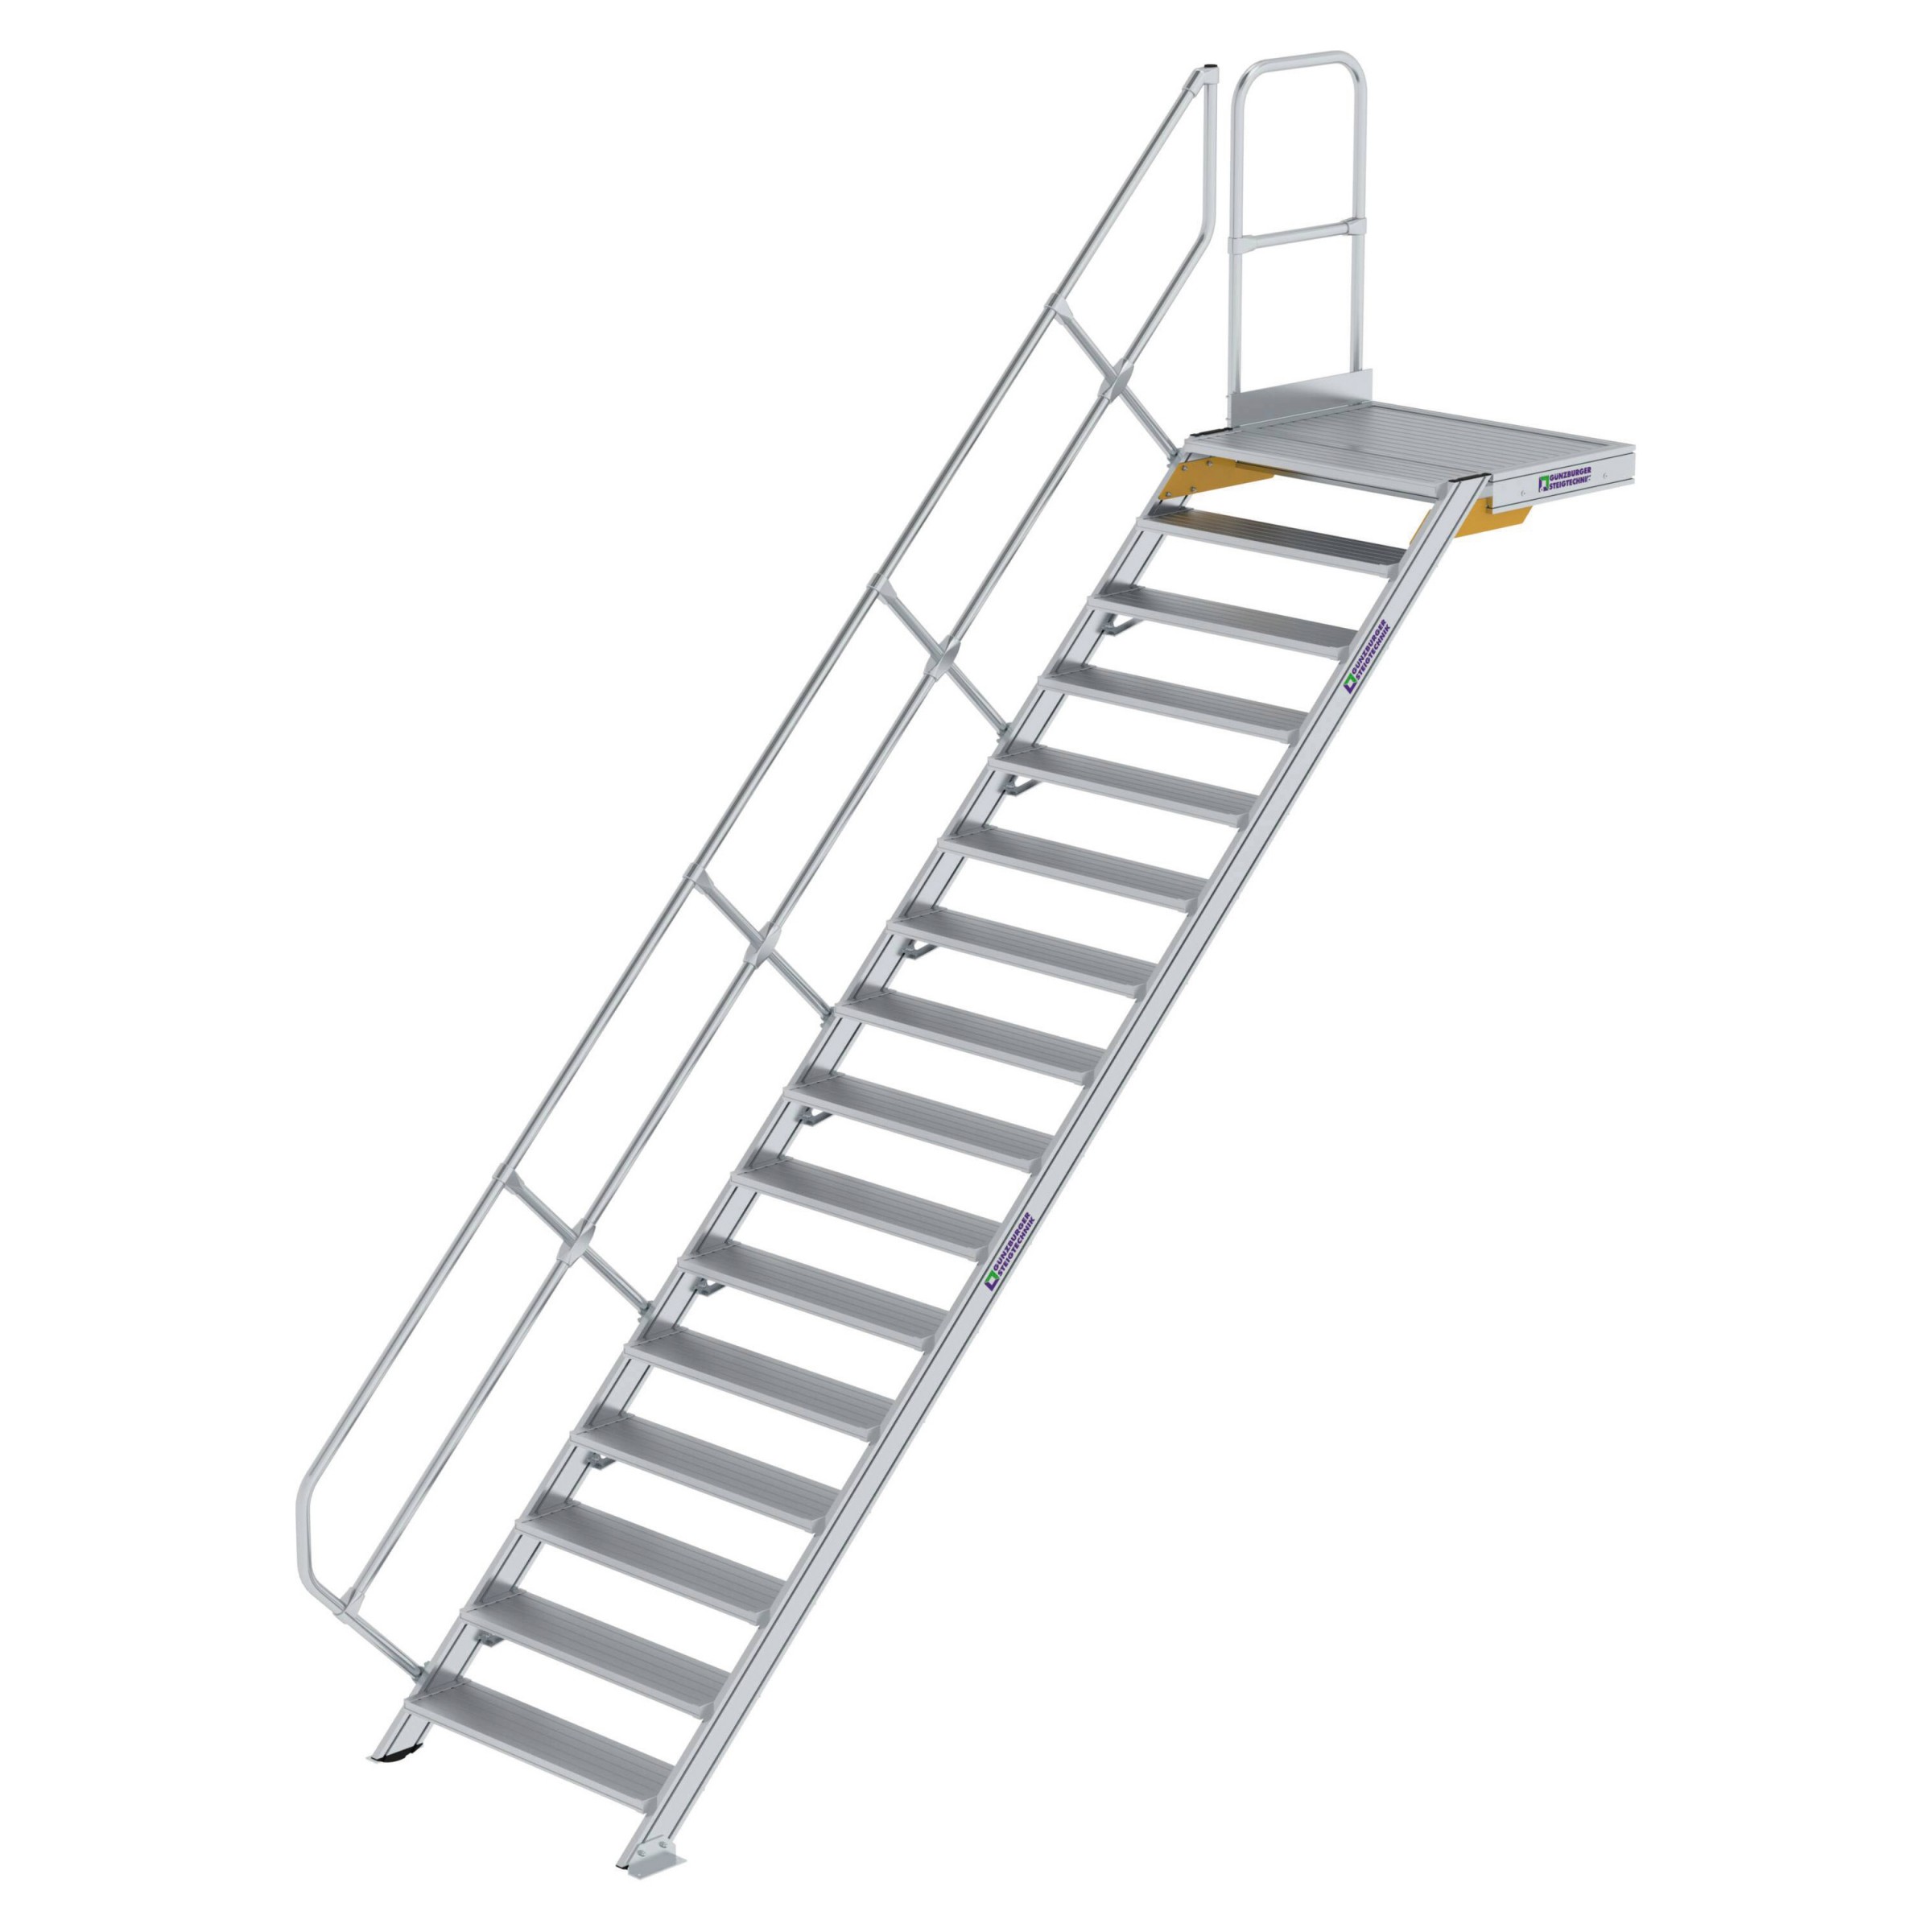 Aluminium-Treppe mit Plattform, 45°, Stufenbreite 1000 mm, 4 Stufen